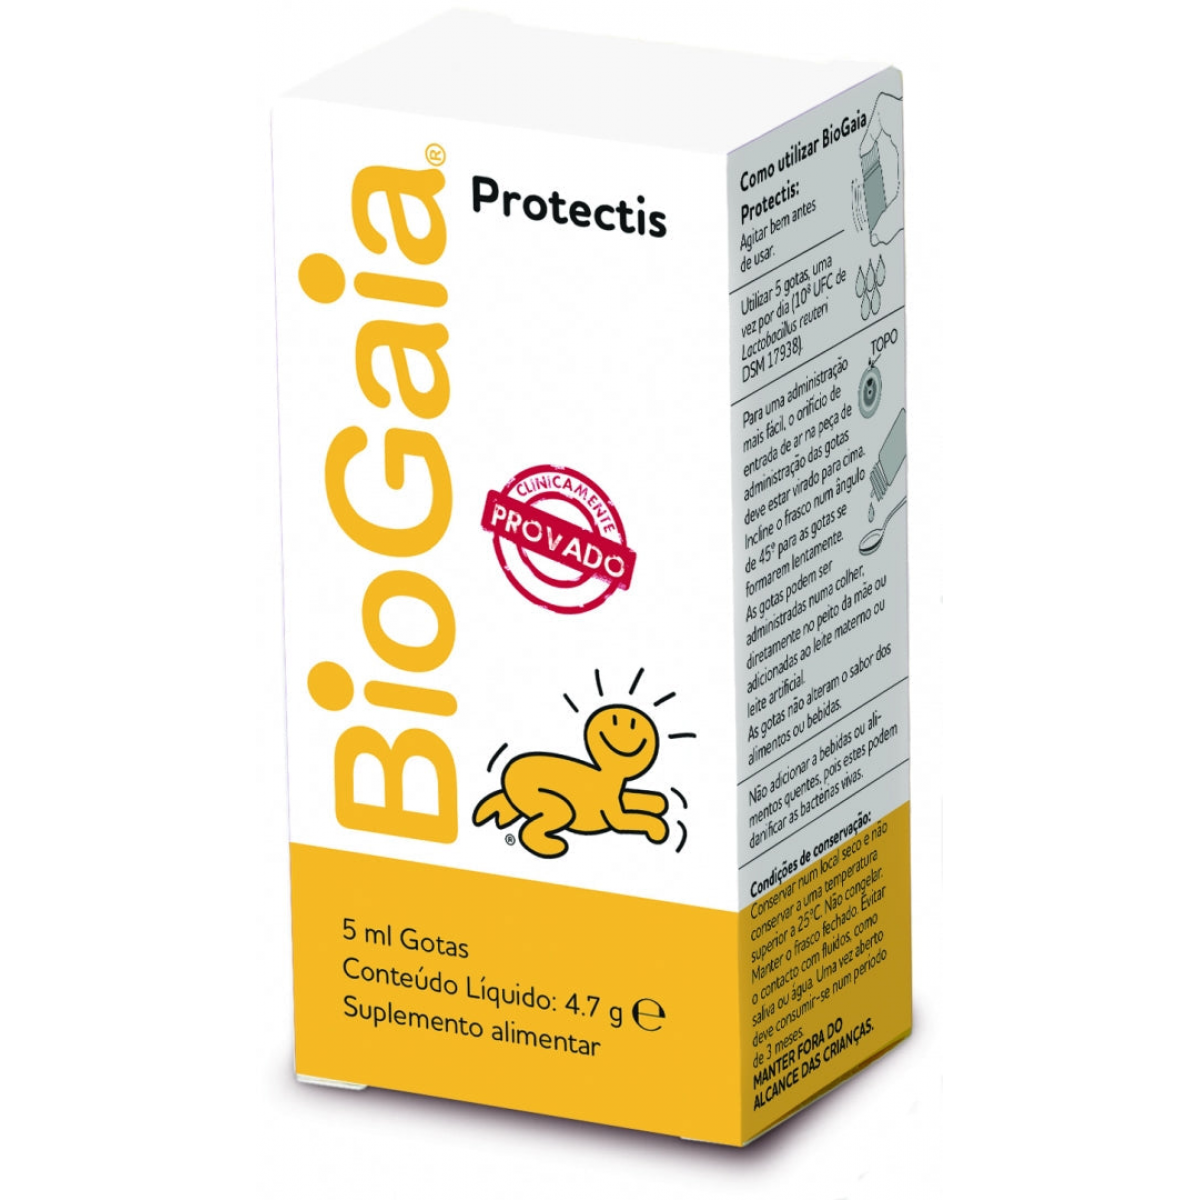 BIOGAIA Protectis Gotas 5ML Suplemento Lactobacillus Reuteri para los Niños